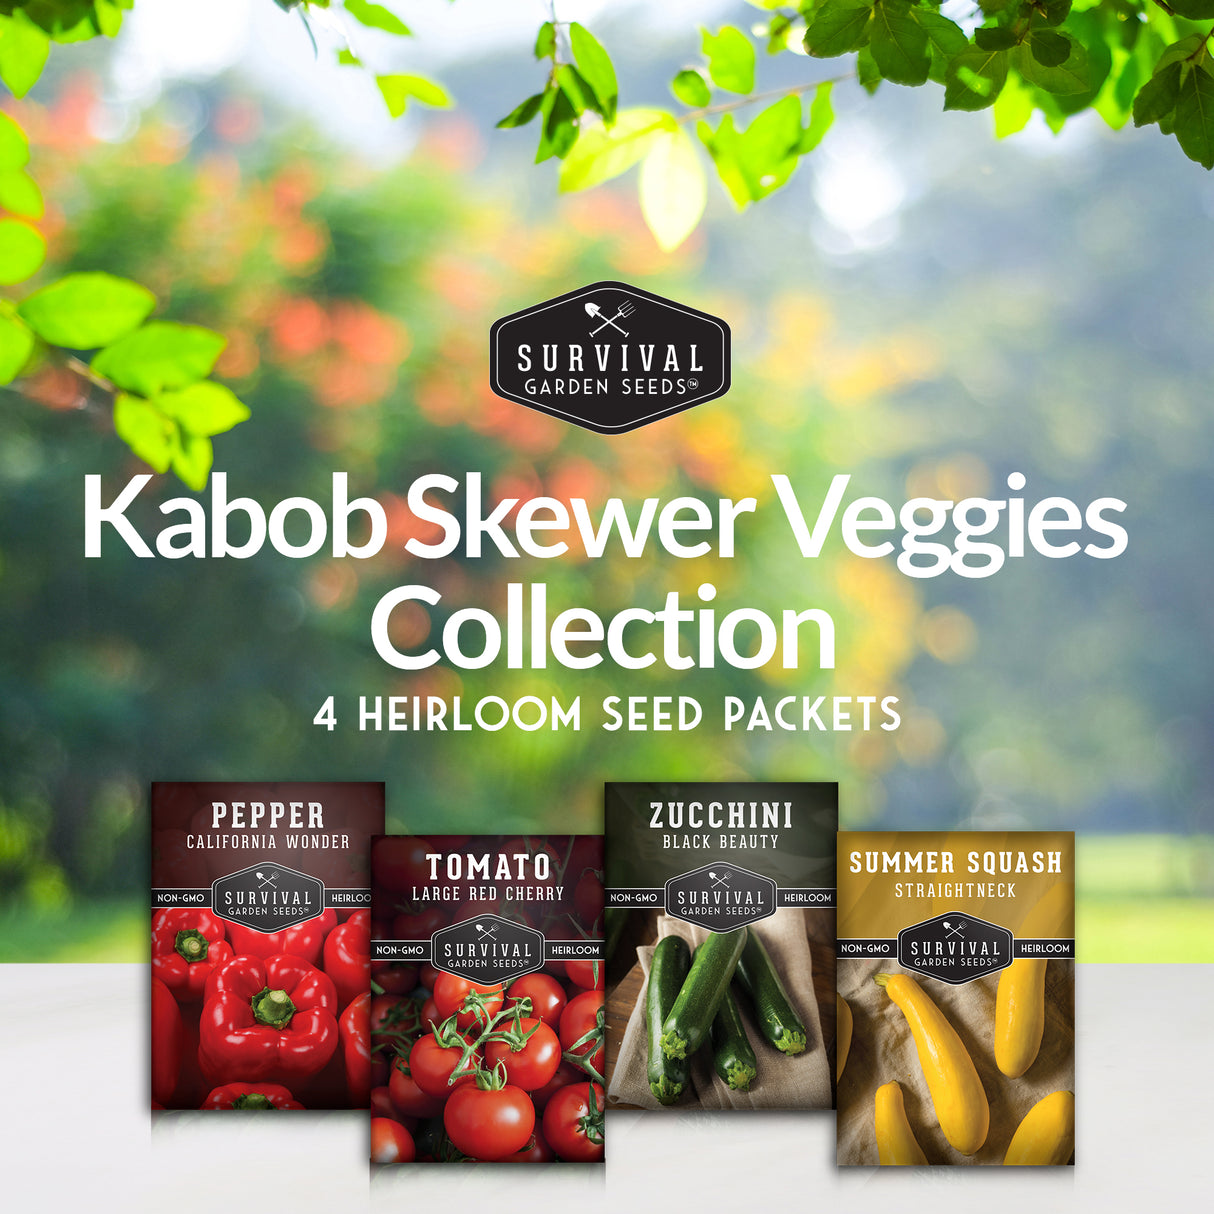 Kabob Skewer Vegetables Collection - Cherry Tomato, Zucchini, Squash, California Wonder Pepper